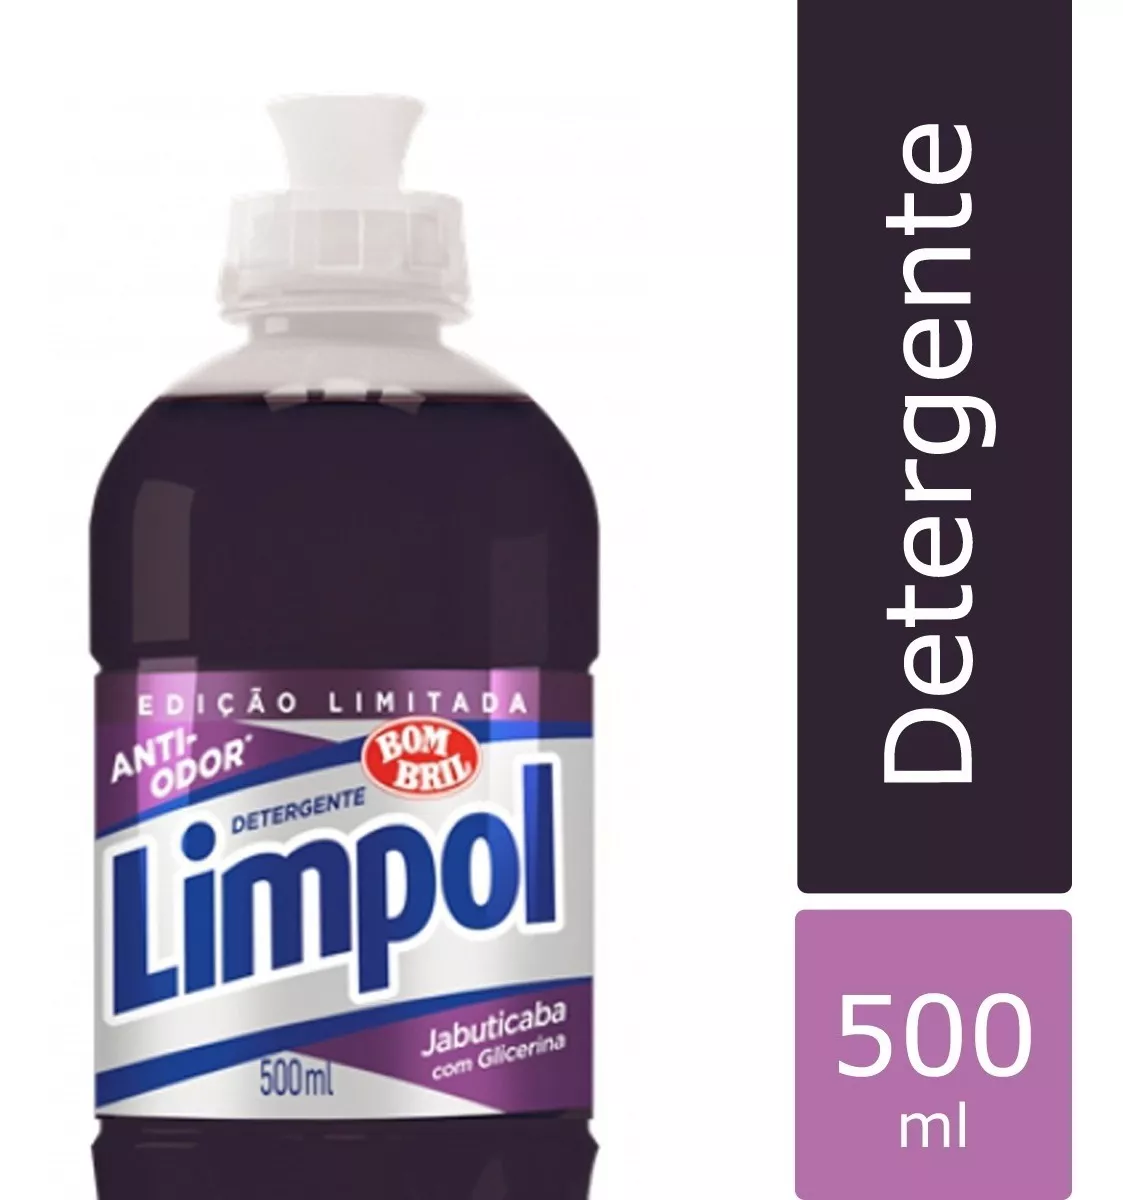 Detergente Limpol Jabuticaba 500ml